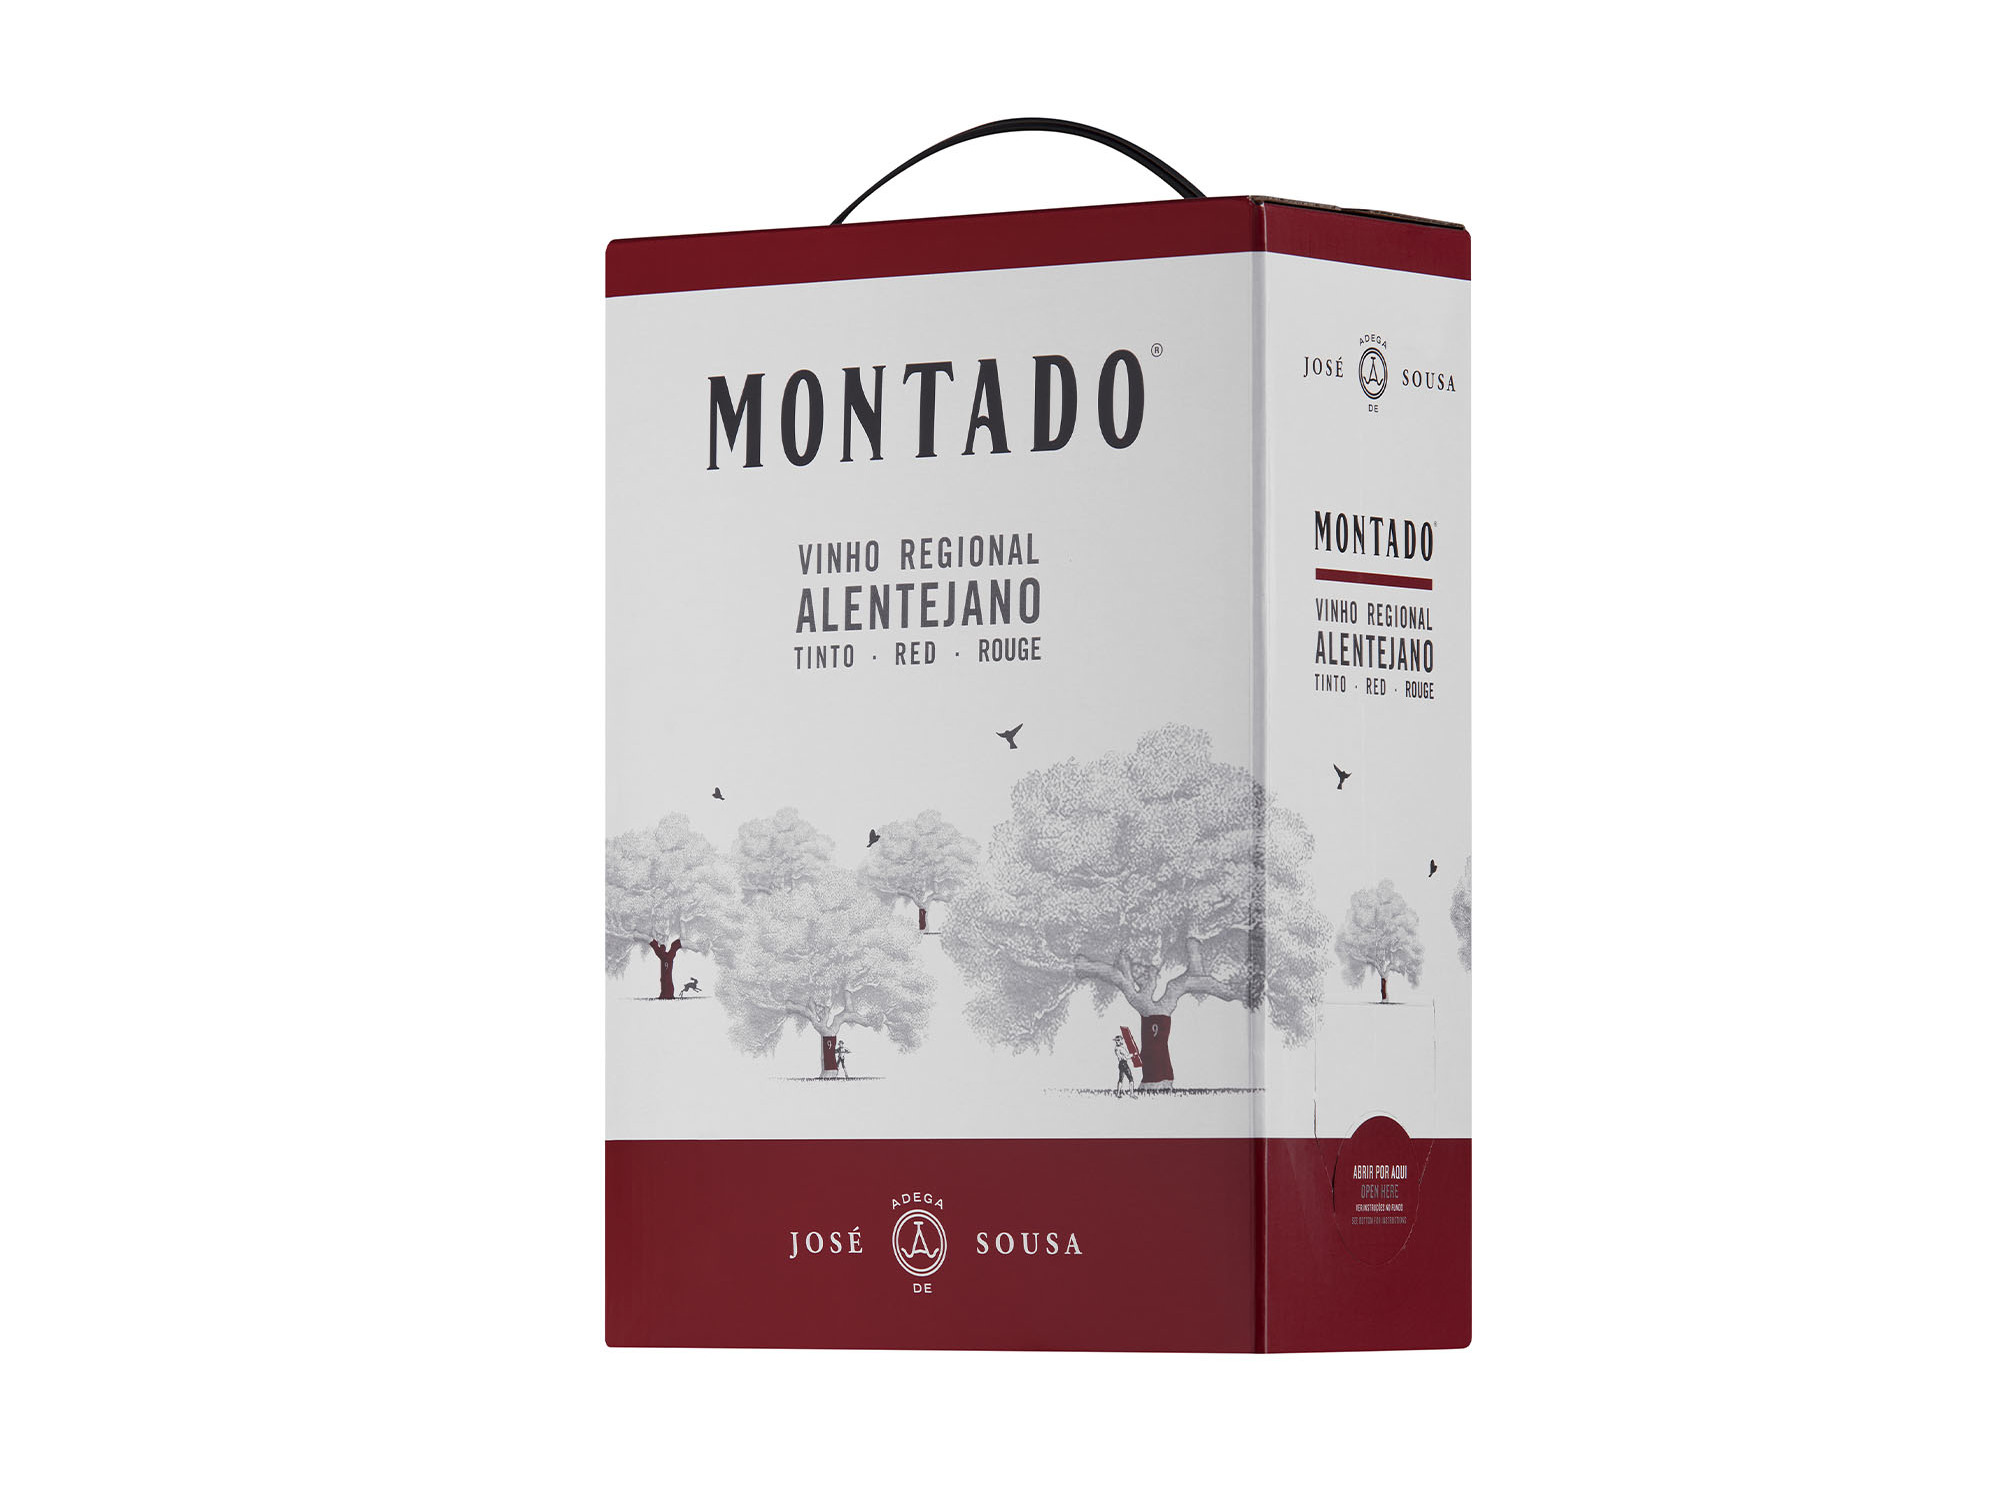 Vinho Tinto 3l In Bag Auchan | Alentejo Montado Box